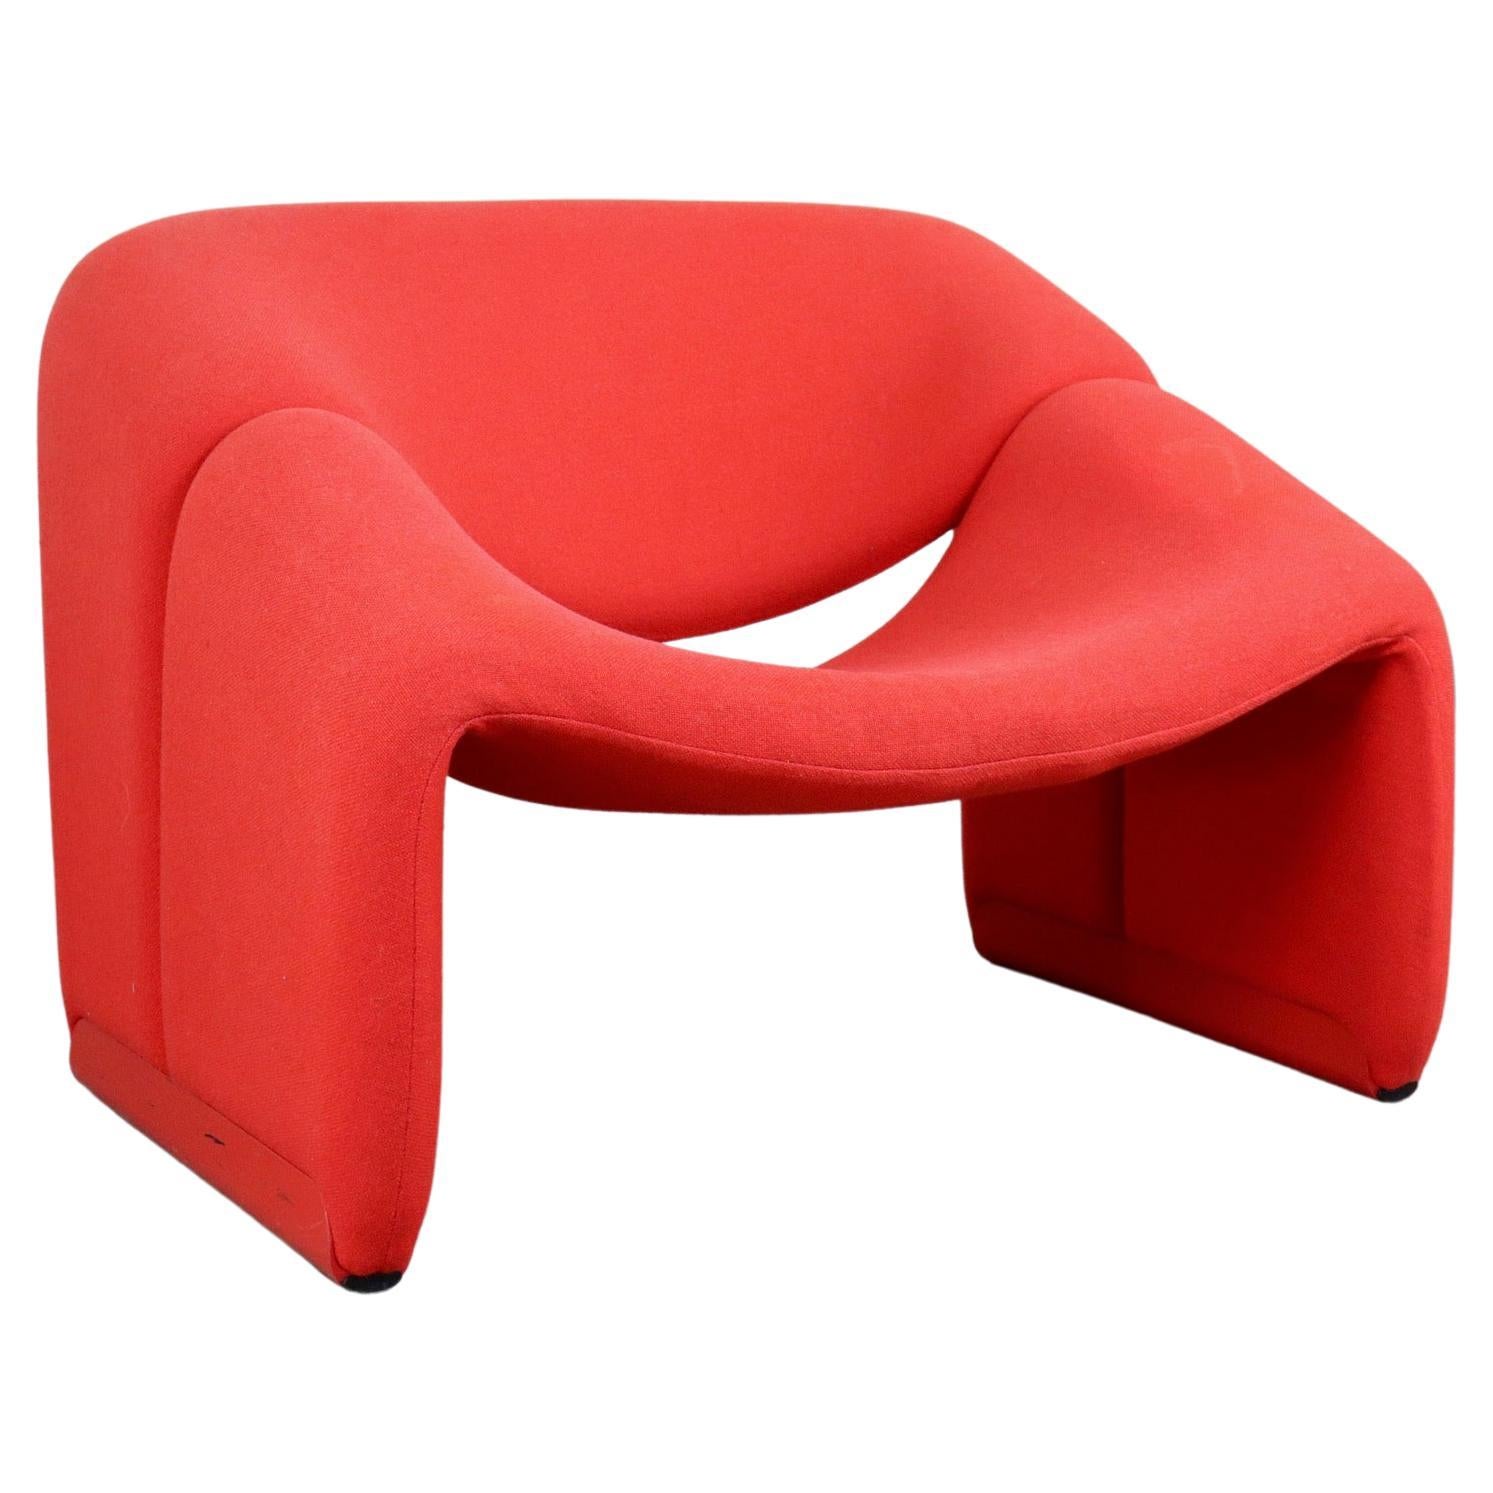 Artifort Groovy F598 (M chair) by Pierre Paulin in red